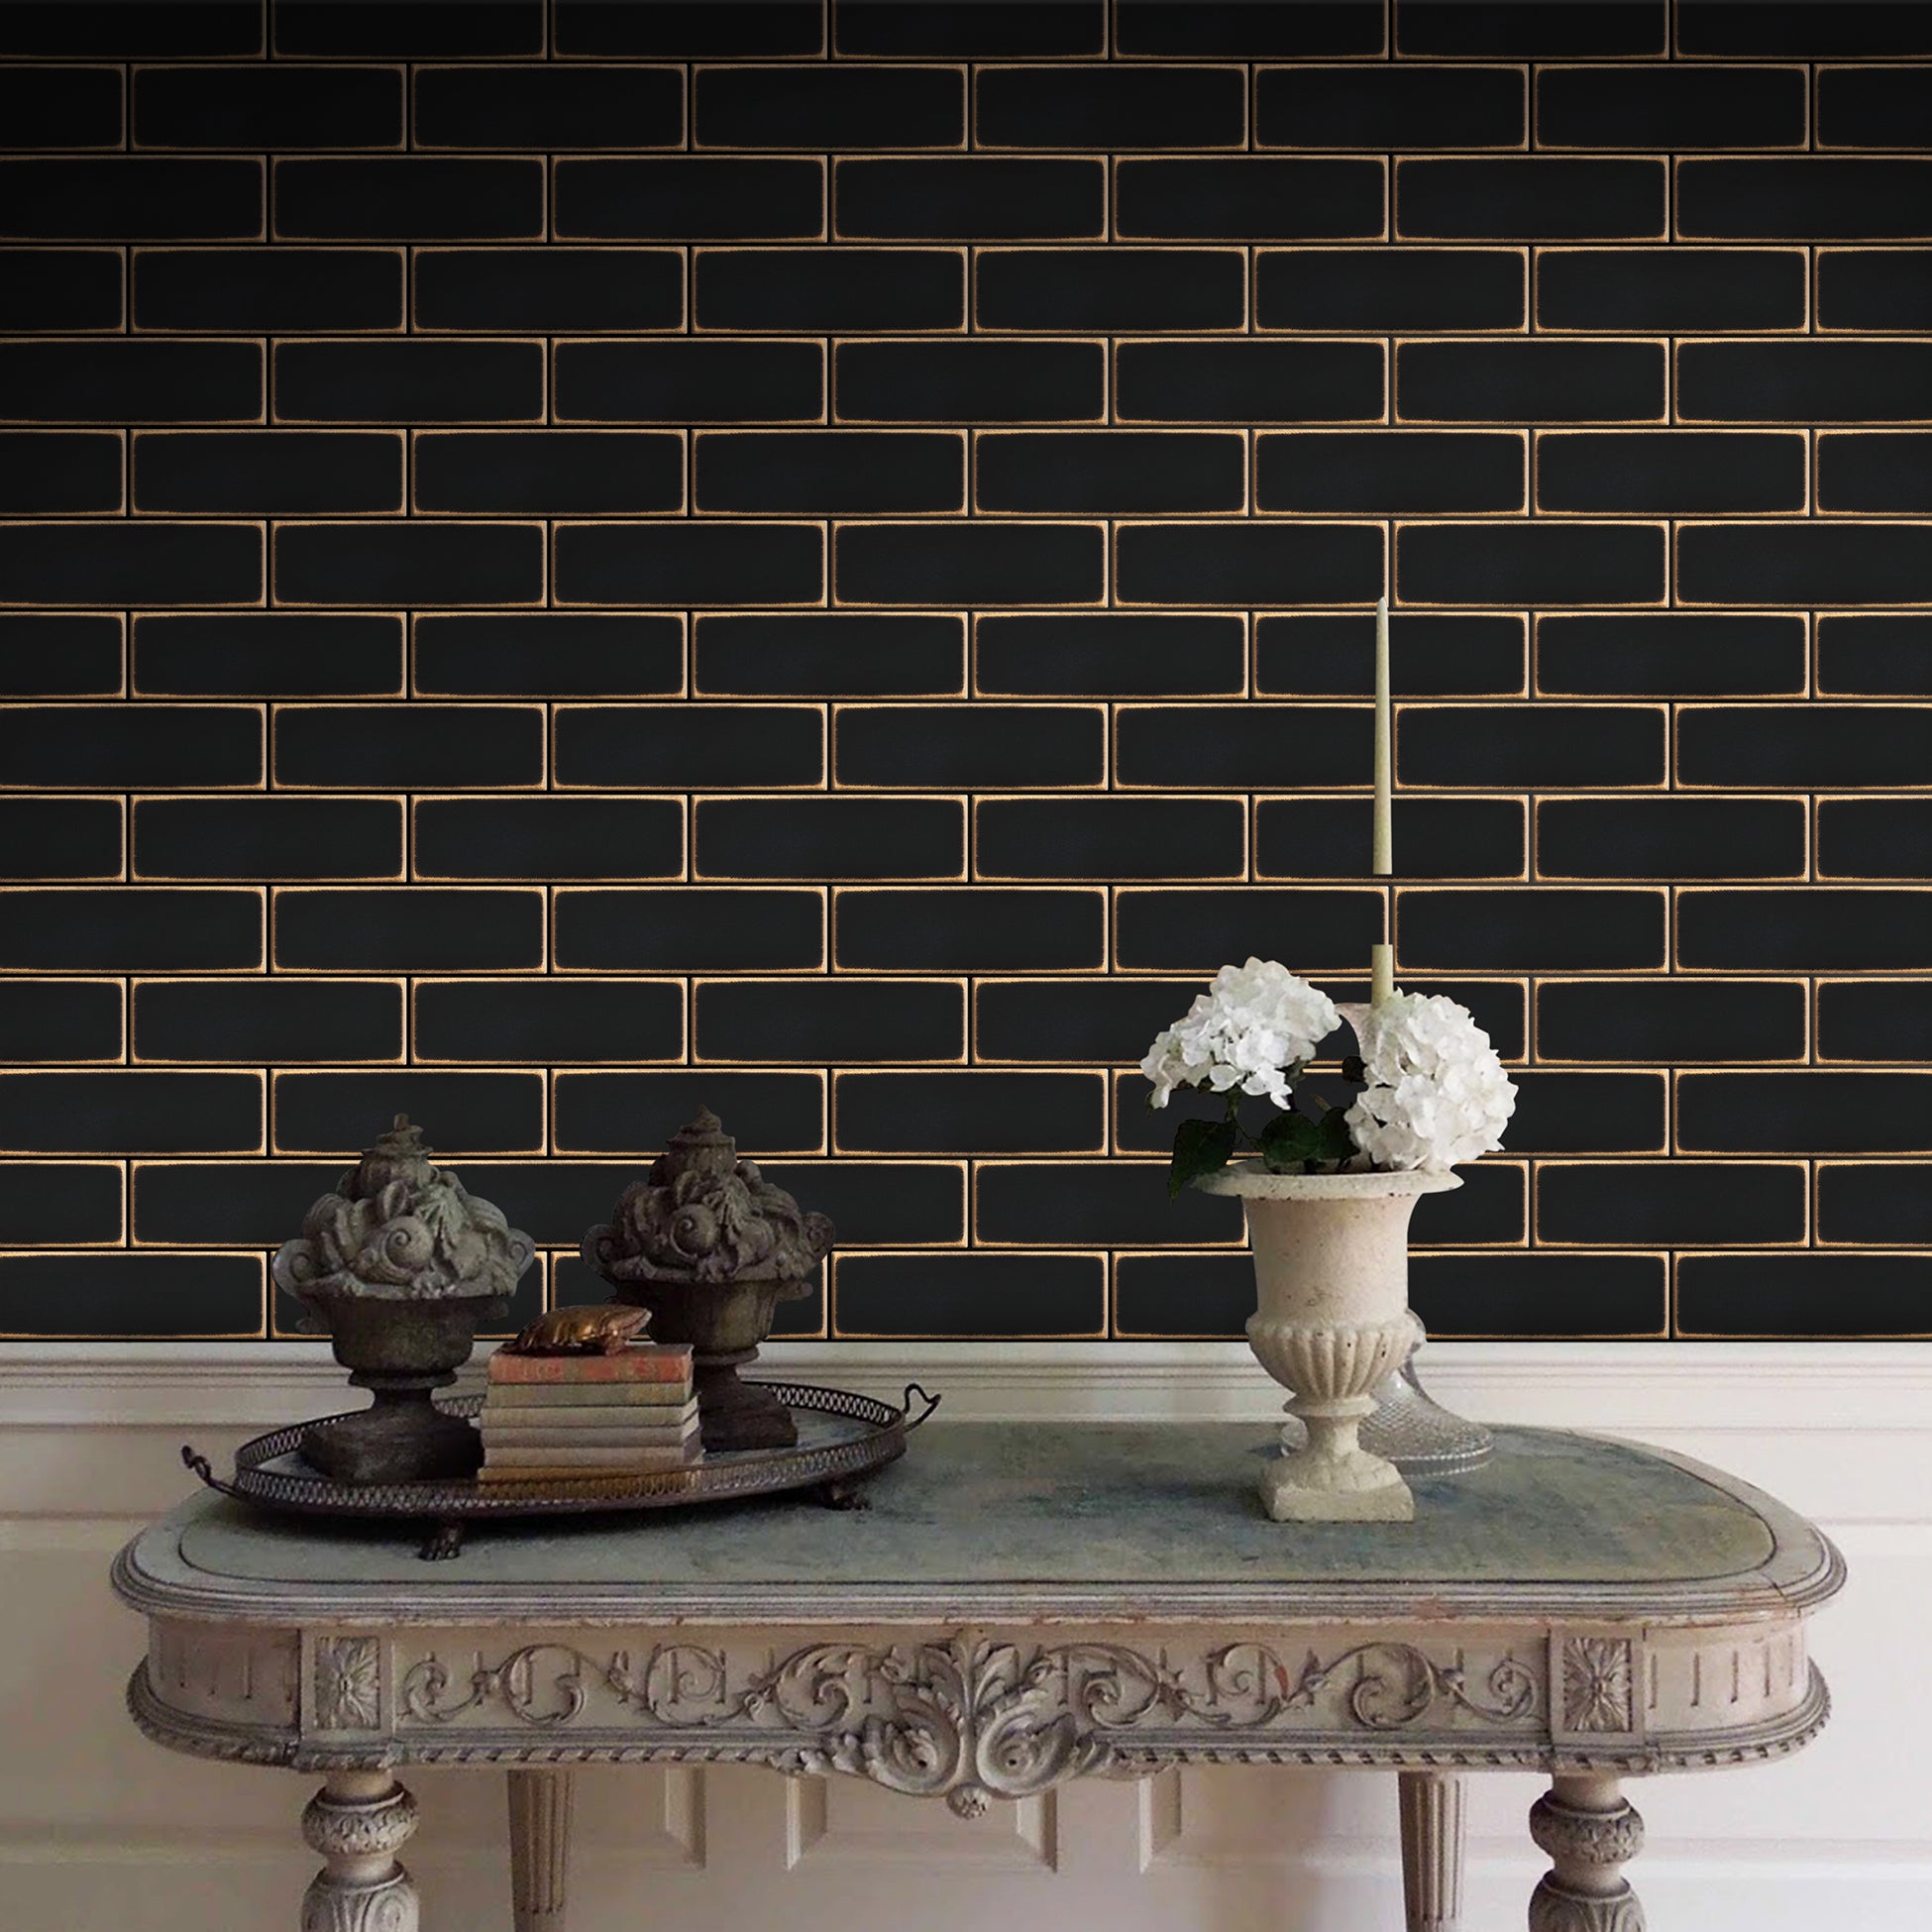 2x6 Ancient Brick Metal Black Bronze Mosaic Wall Tile for Kitchen Backsplash, Accent Wall, Bathroom Wall, Fireplace Surround